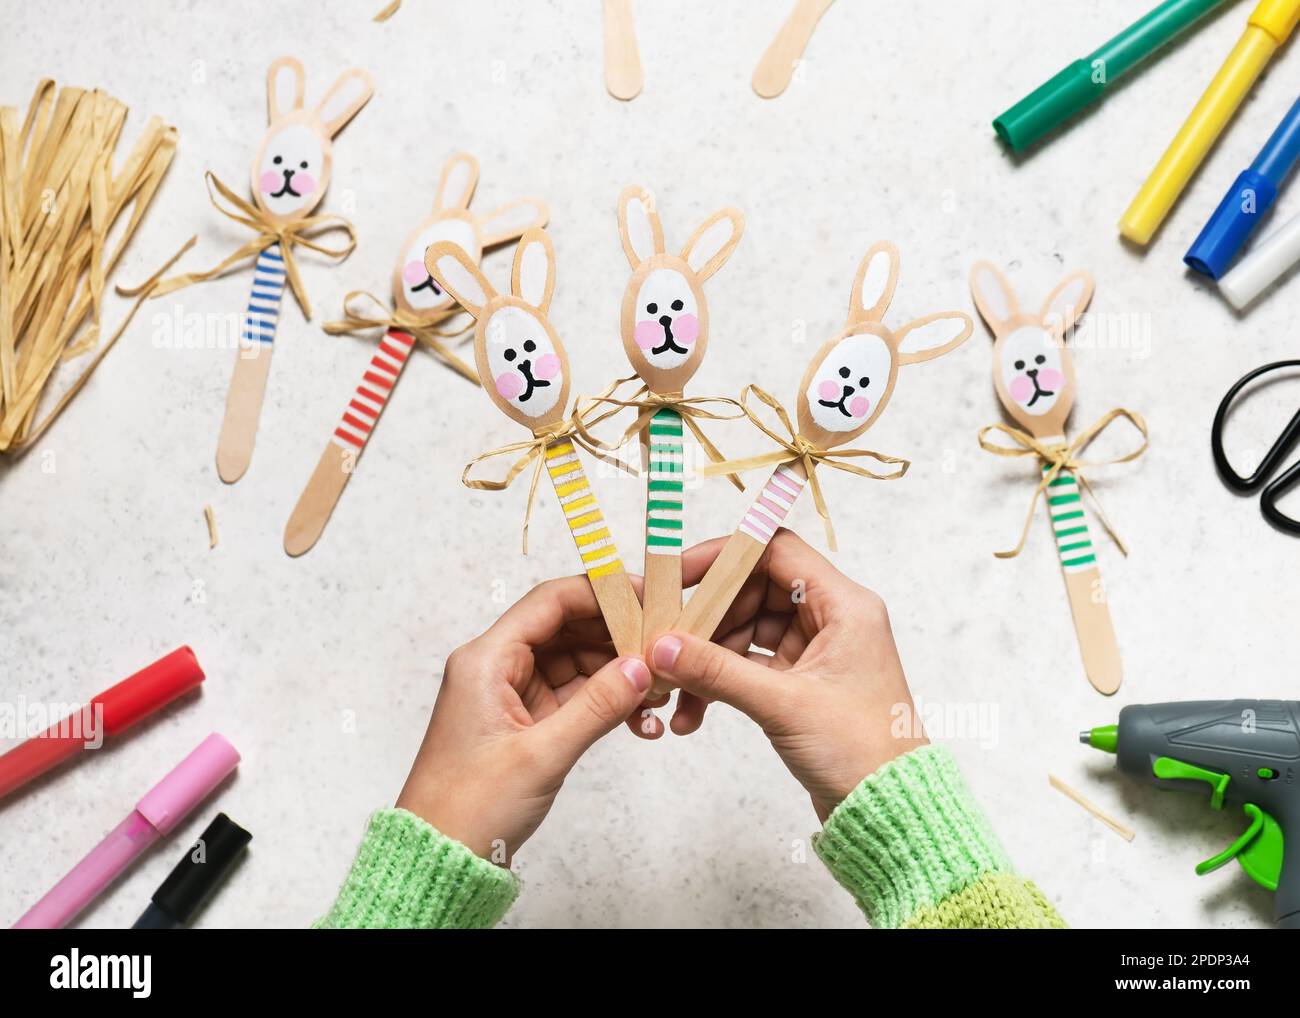 Vista superior de tres conejitos divertidos coloridos hechos a mano de cucharas de madera en manos de niños. Pequeño regalo o decoración para Pascua. Fácil diversión niños manualidades concepto Foto de stock